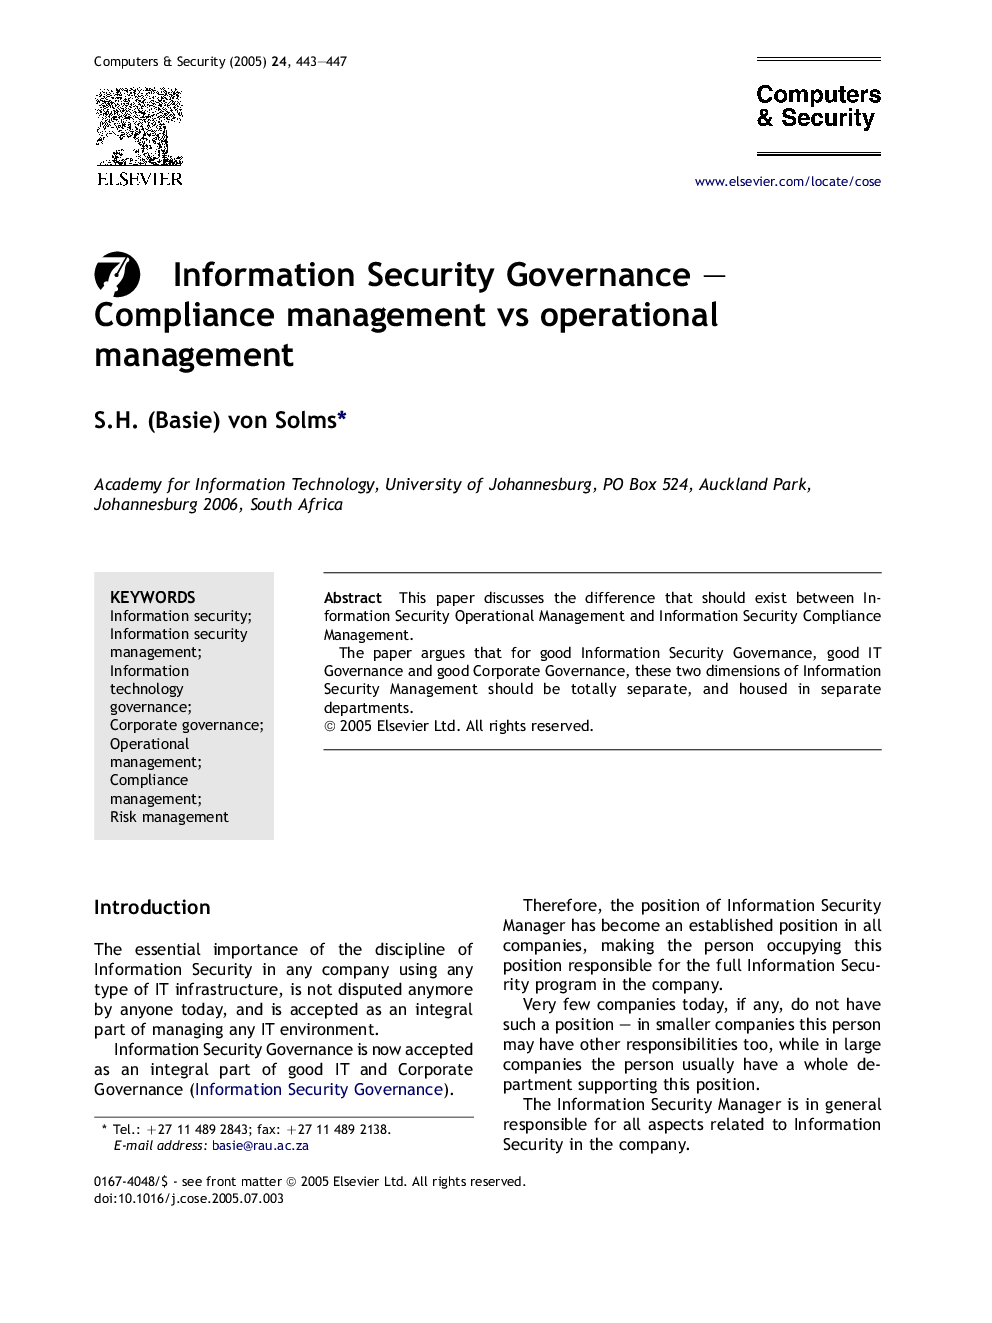 Information Security Governance - Compliance management vs operational management